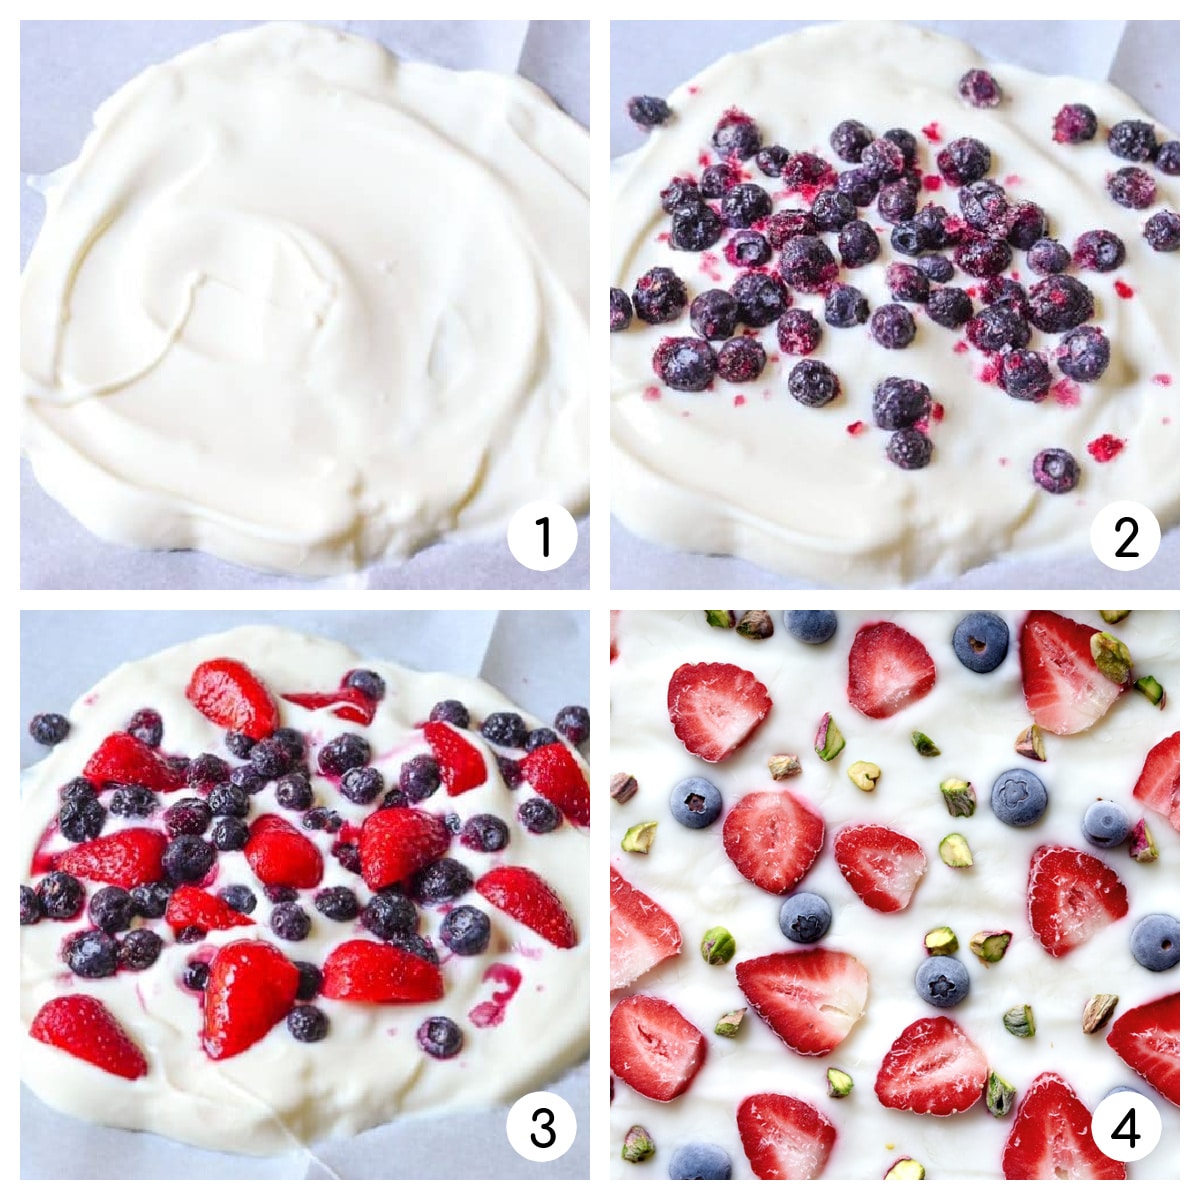 4 Steps to Make a Frozen Yogurt Bark with Greek Yogurt, Strawberries, Blueberries and Pistachios